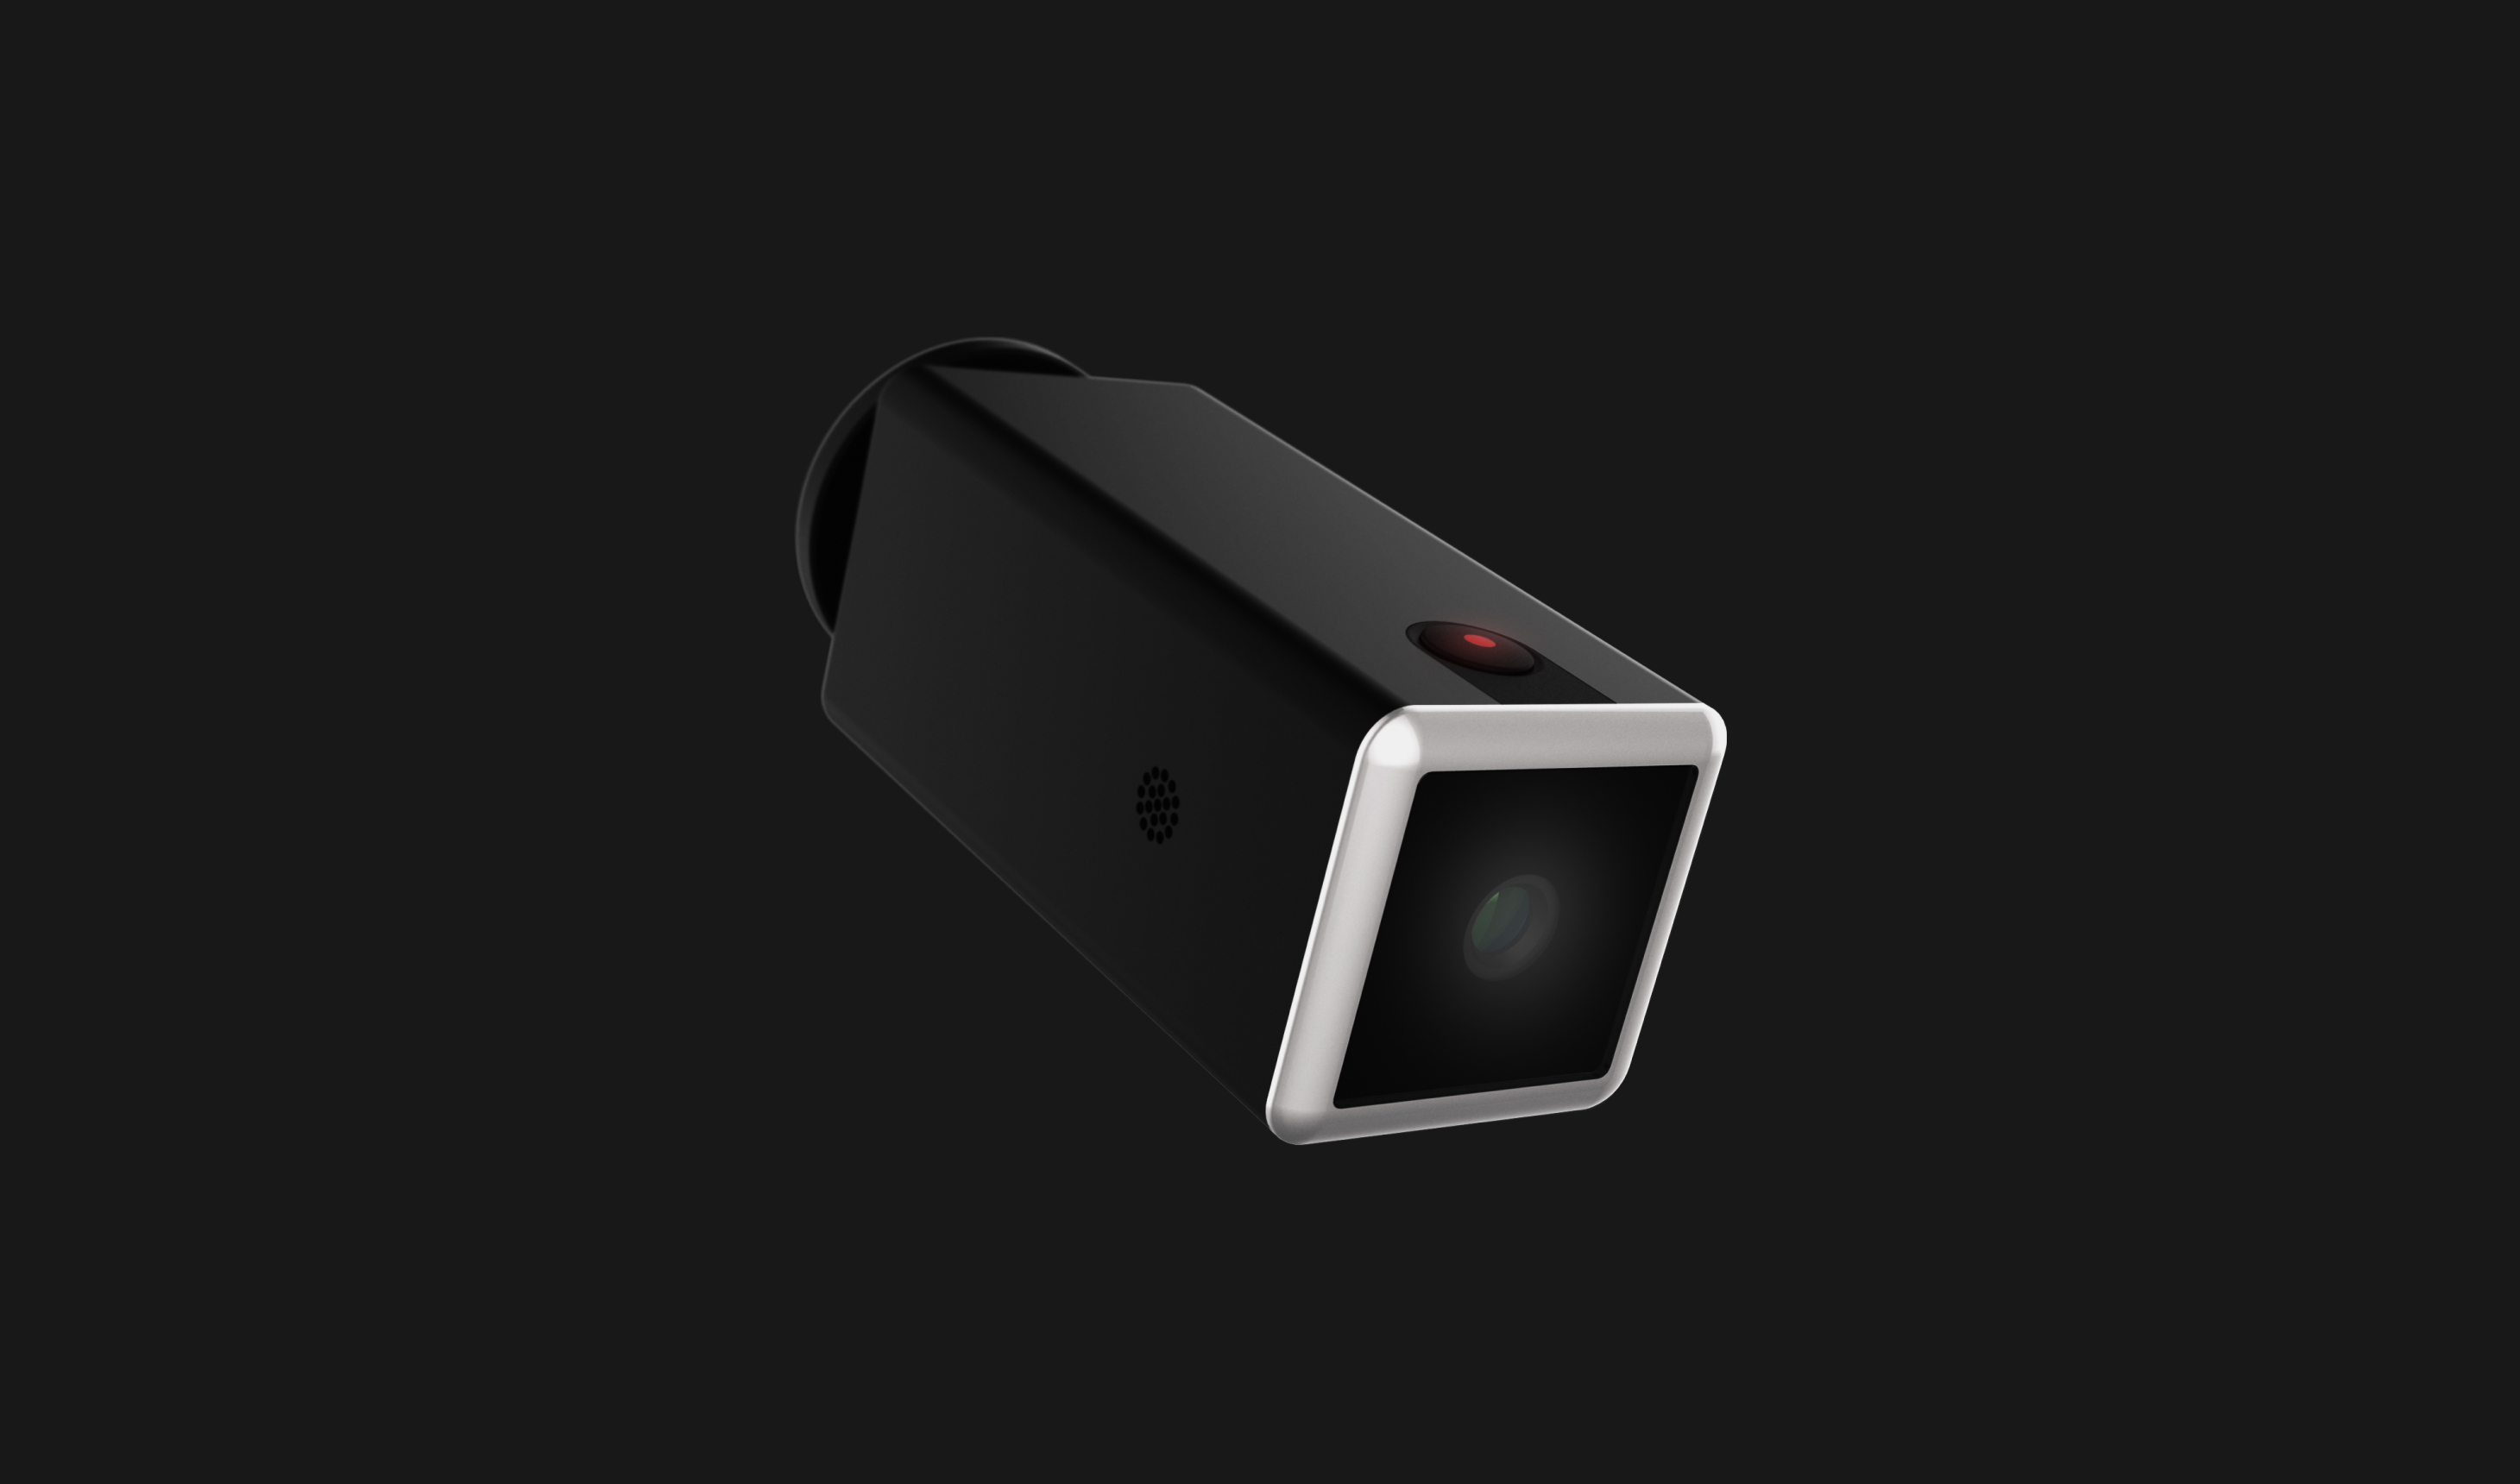 Opkix wearable camera